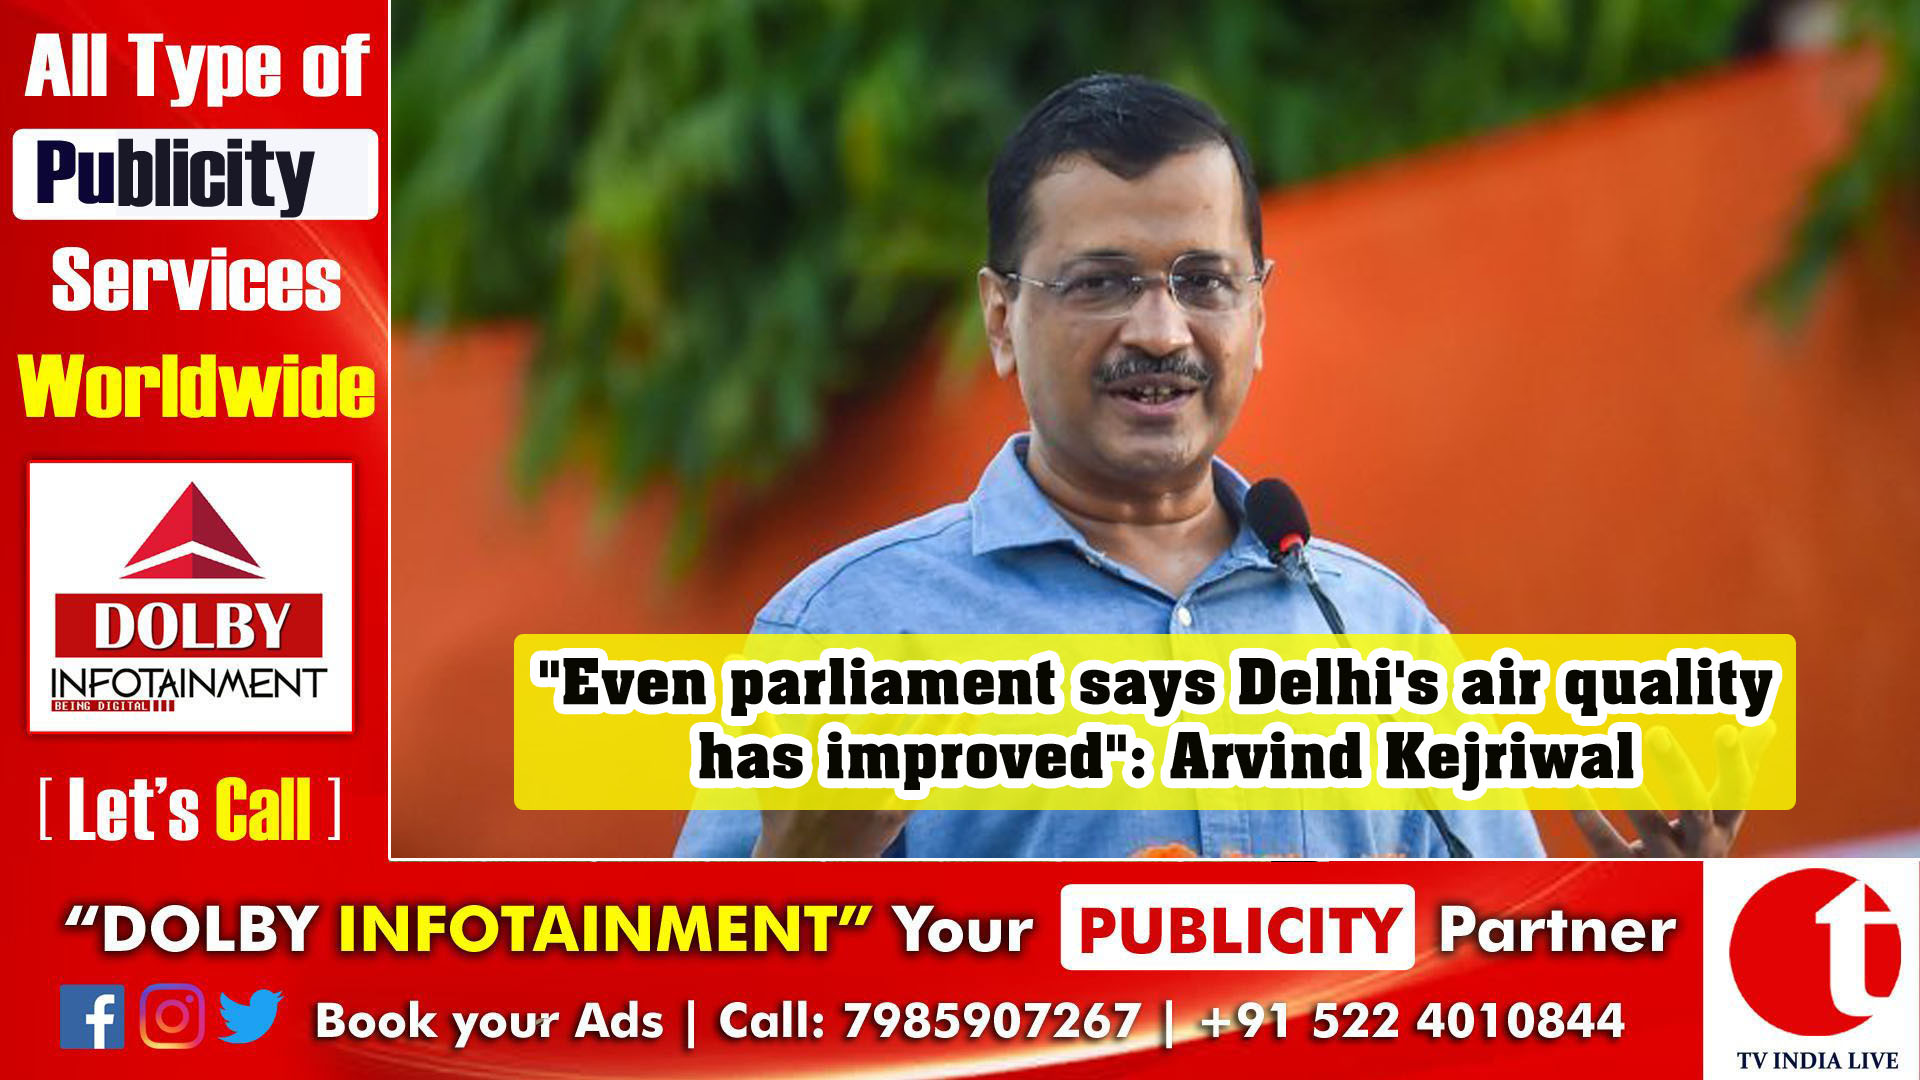 "Even parliament says Delhi's air quality has improved": Arvind Kejriwal